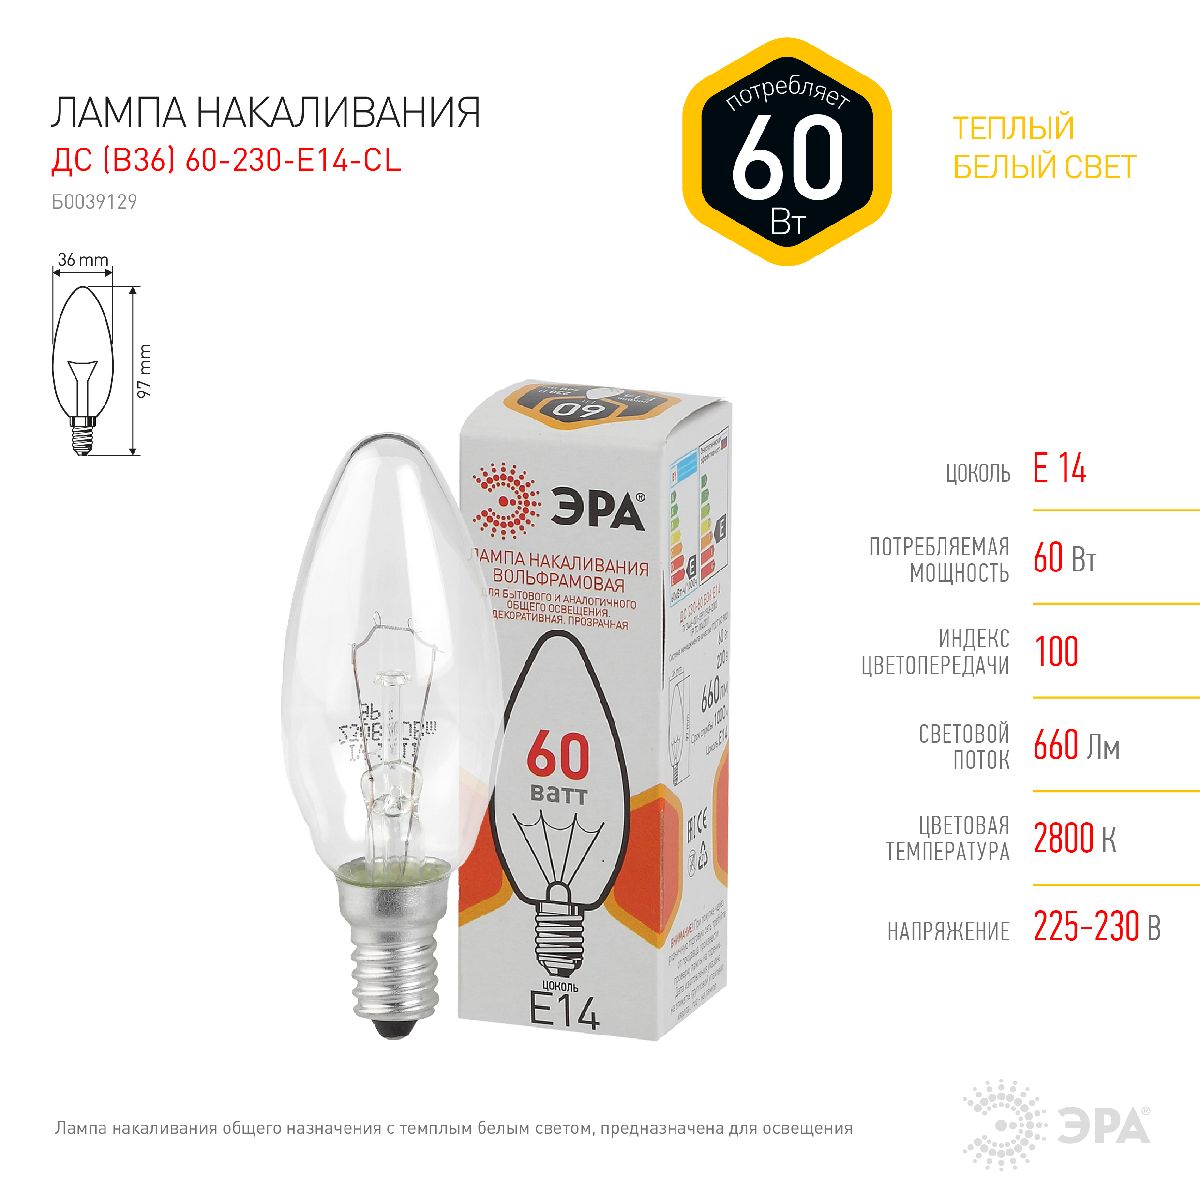 Лампа накаливания Эра E14 60W ДС 60-230-E14-CL Б0039129